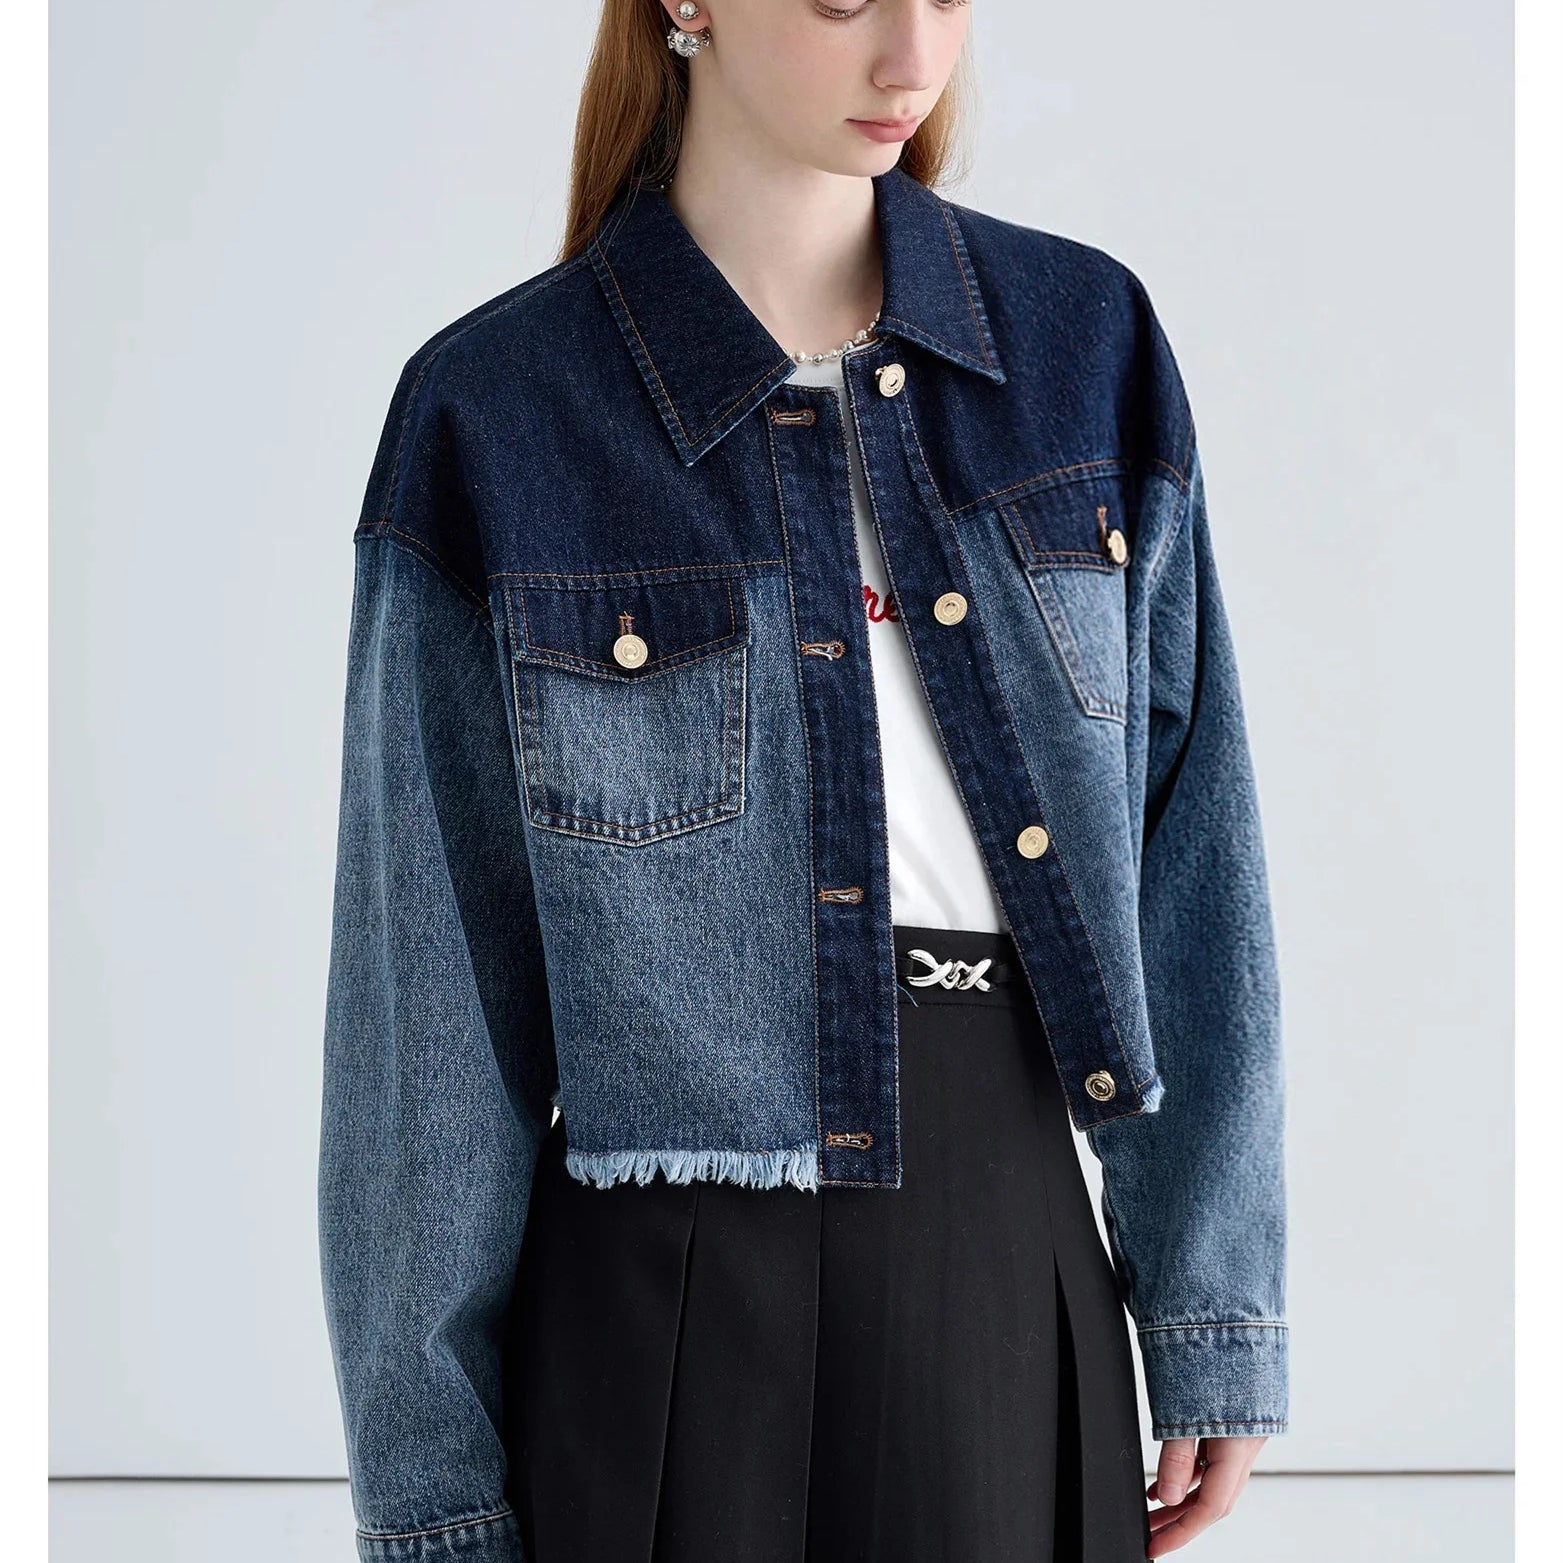 Woman Short Jacket Gradient Denim Coat Fashion Sweet Jean Top Buttons Female Sylish Top Denim Outwear